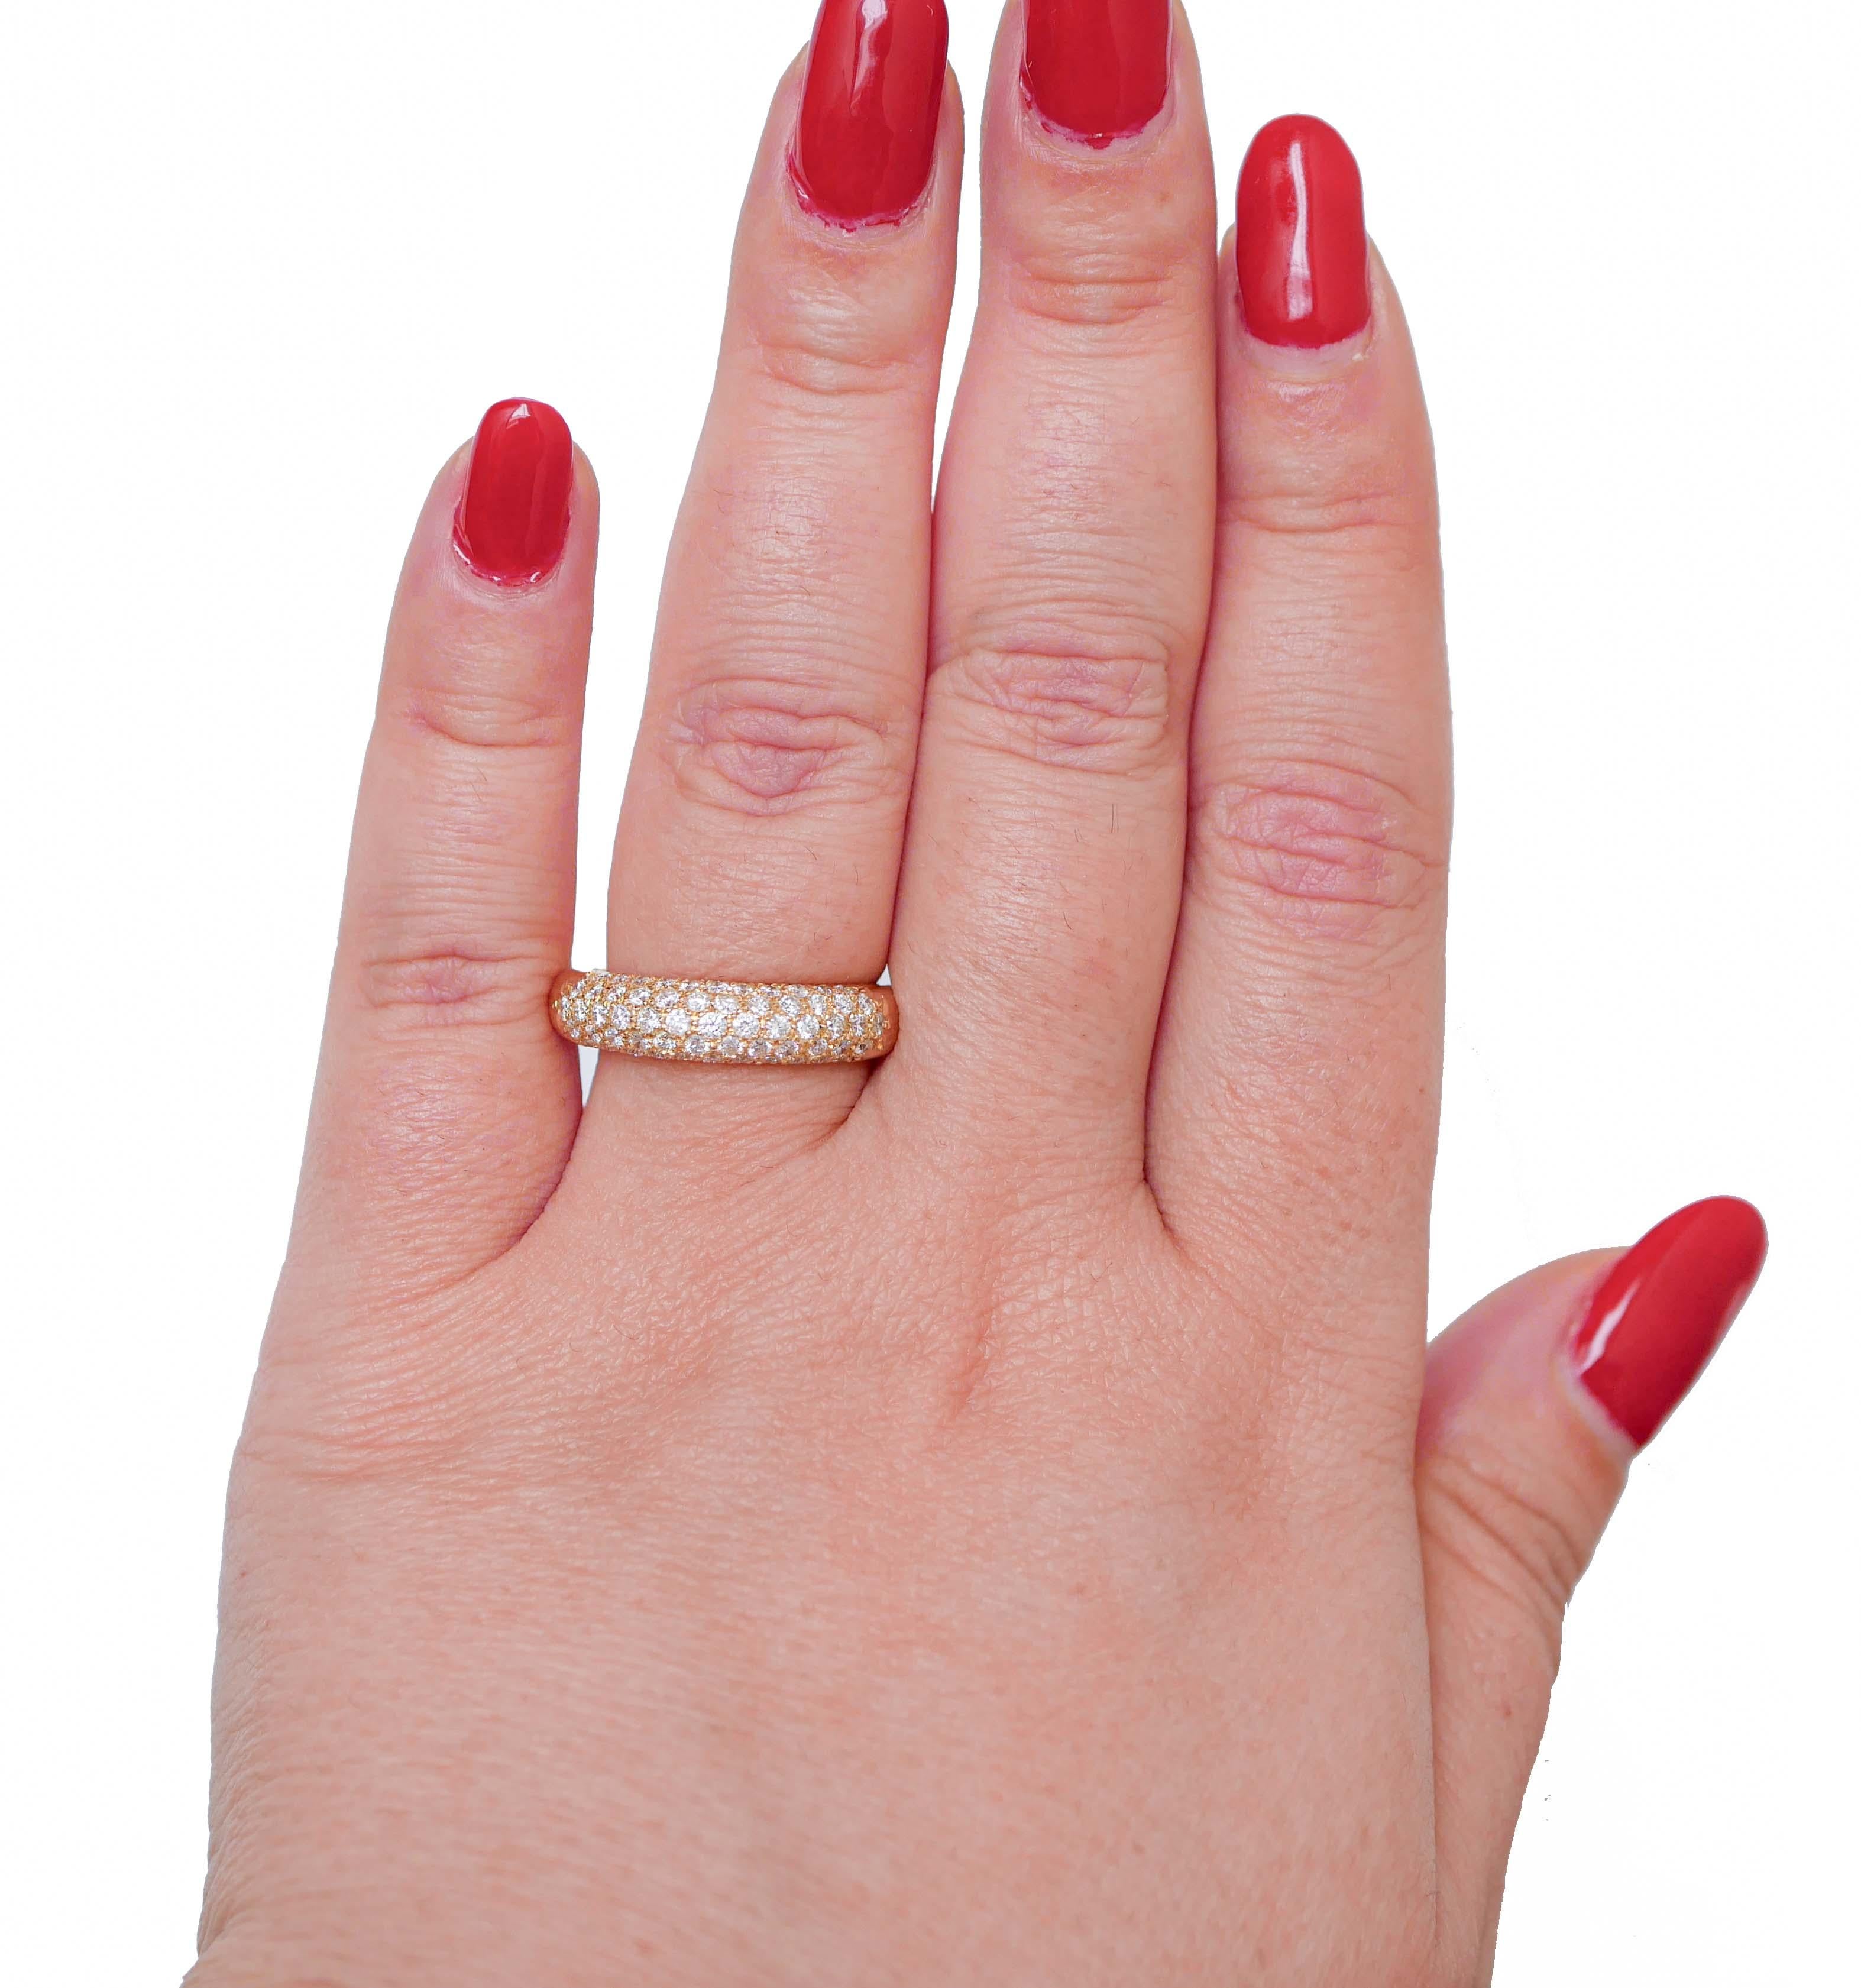 Brilliant Cut Diamonds, 18 Karat Yellow Gold Ring. For Sale